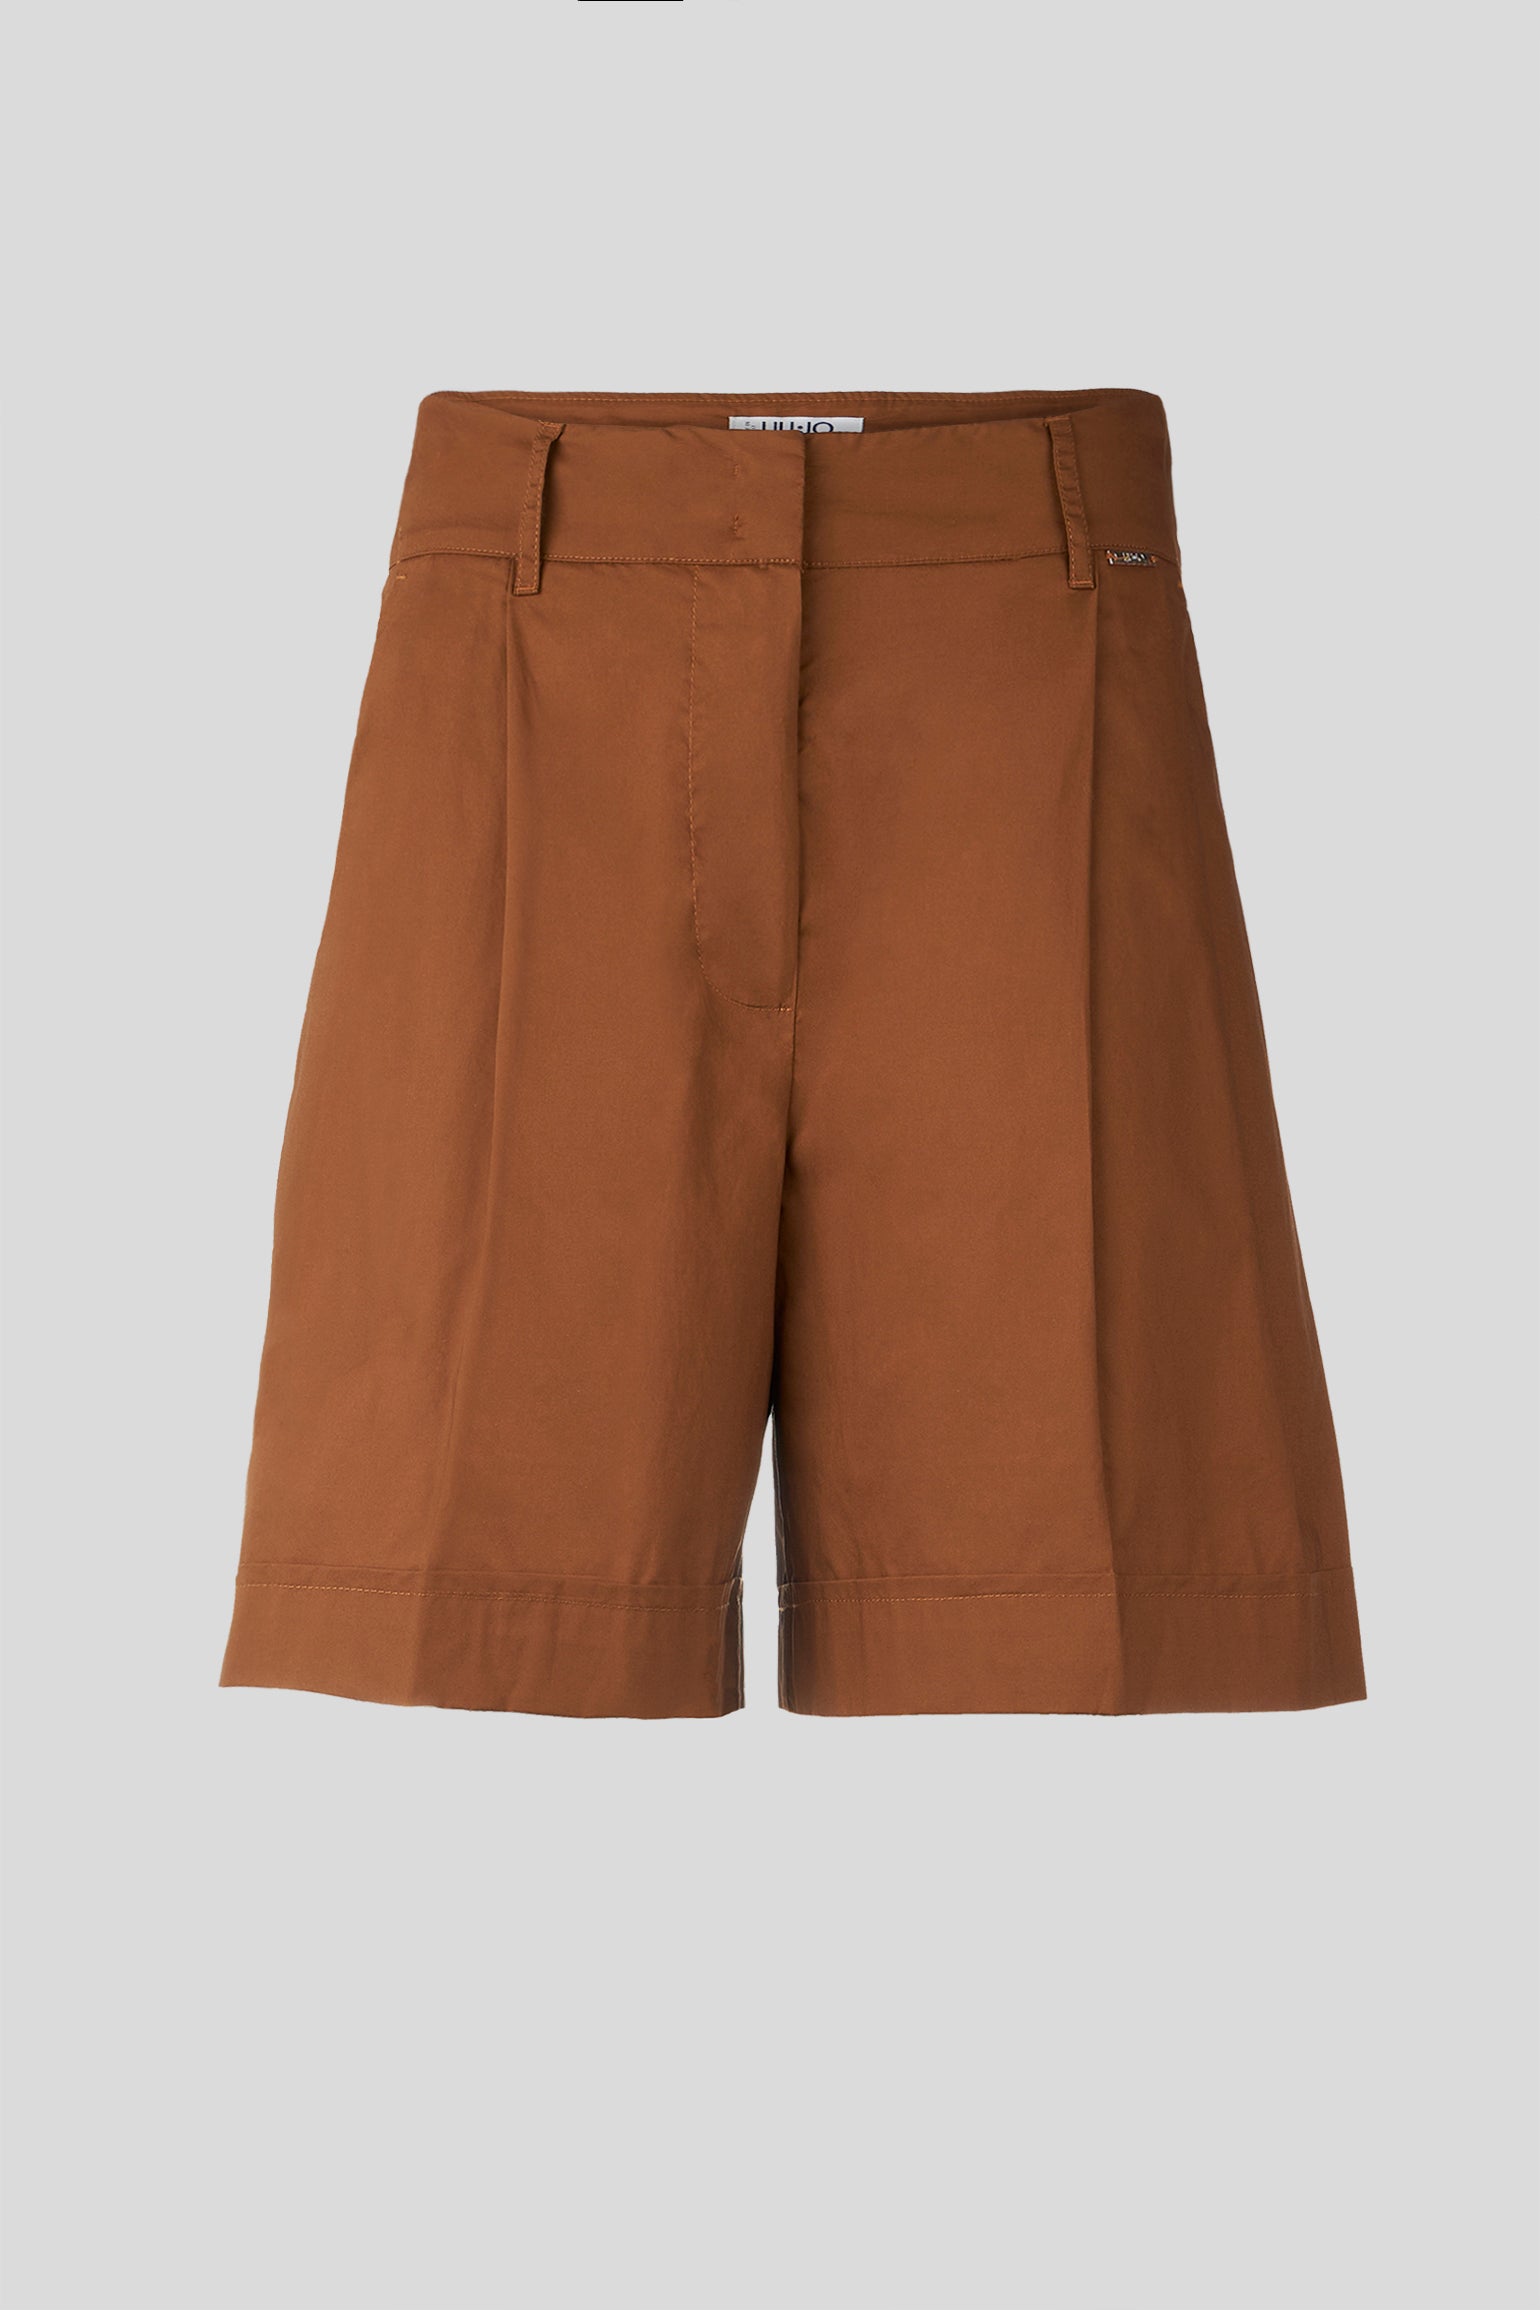 LIU JO Brown Shorts